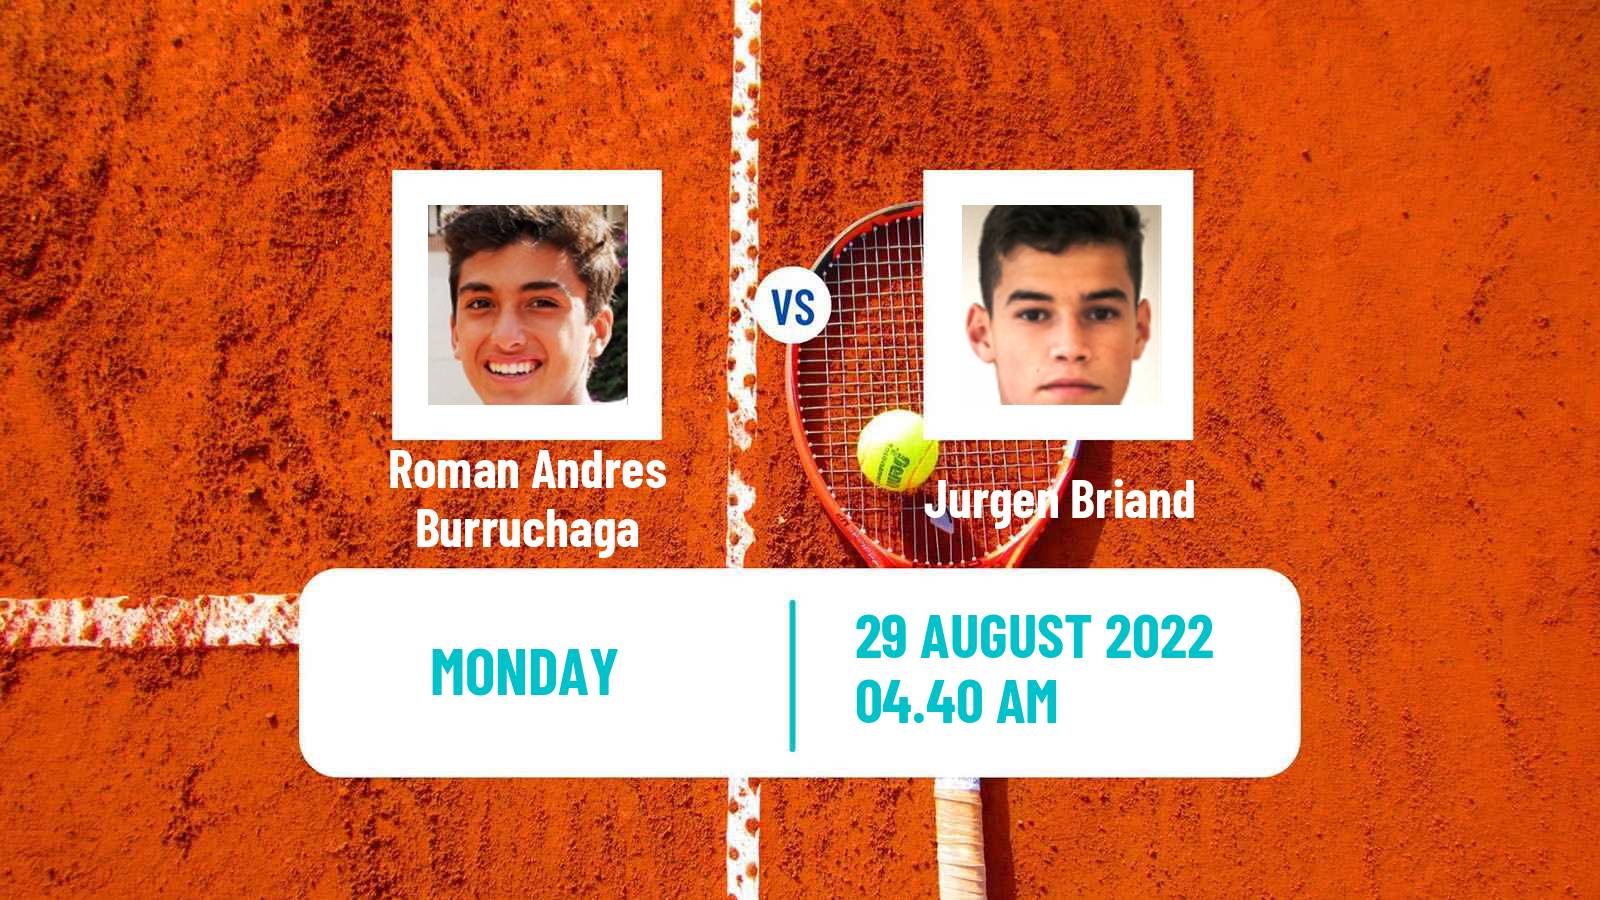 Tennis ATP Challenger Roman Andres Burruchaga - Jurgen Briand